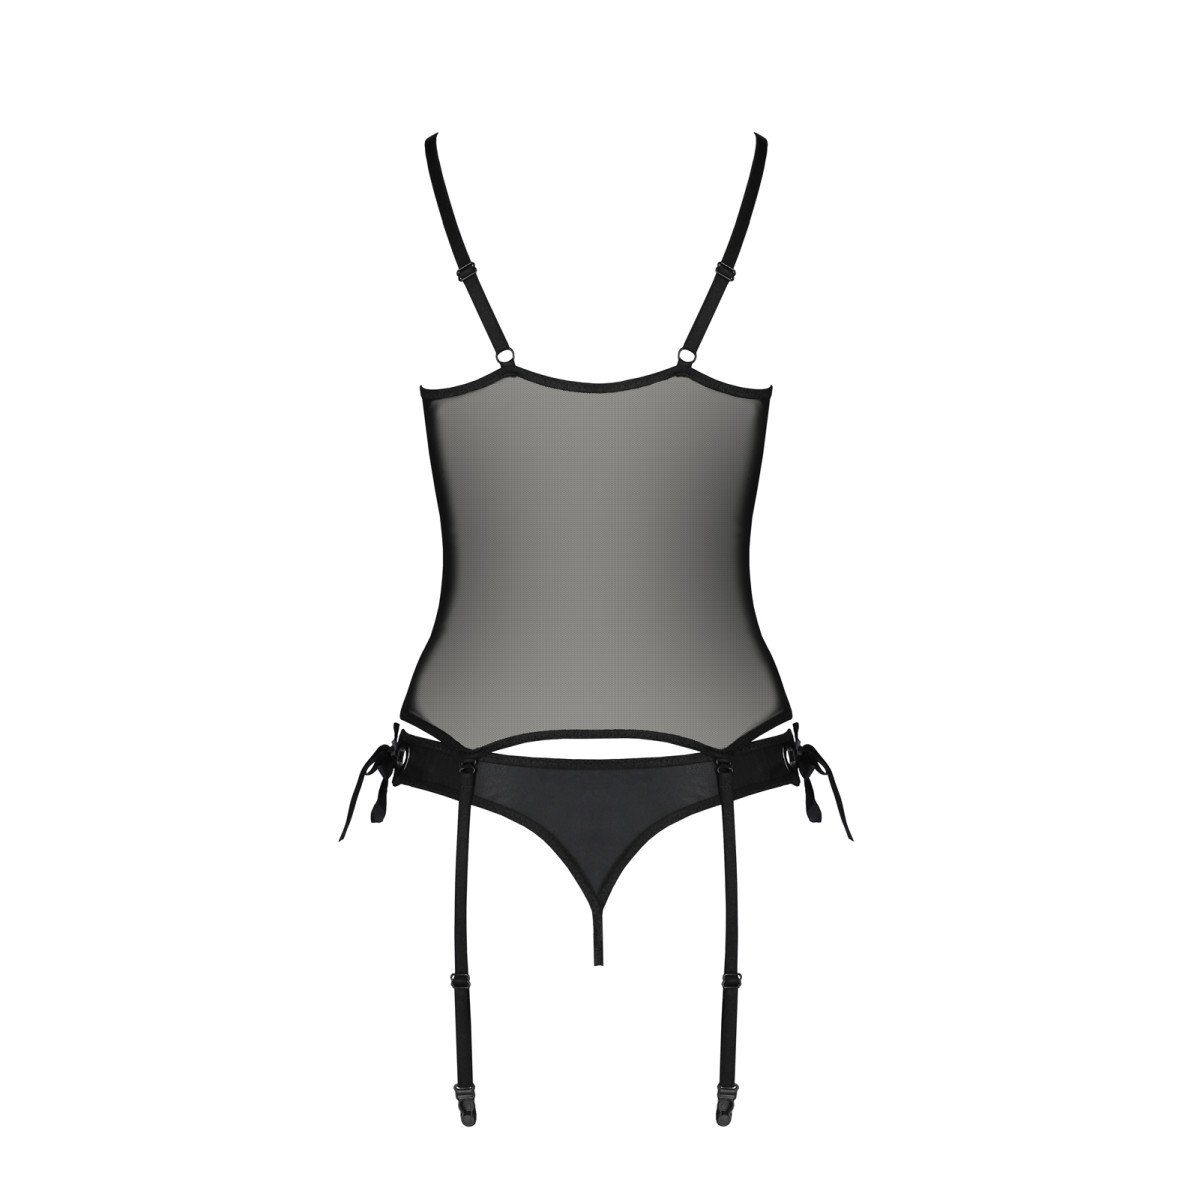 Passion-Exklusiv Corsage PE black & corset Nessy - (L/XL,S/M,XXL) thong